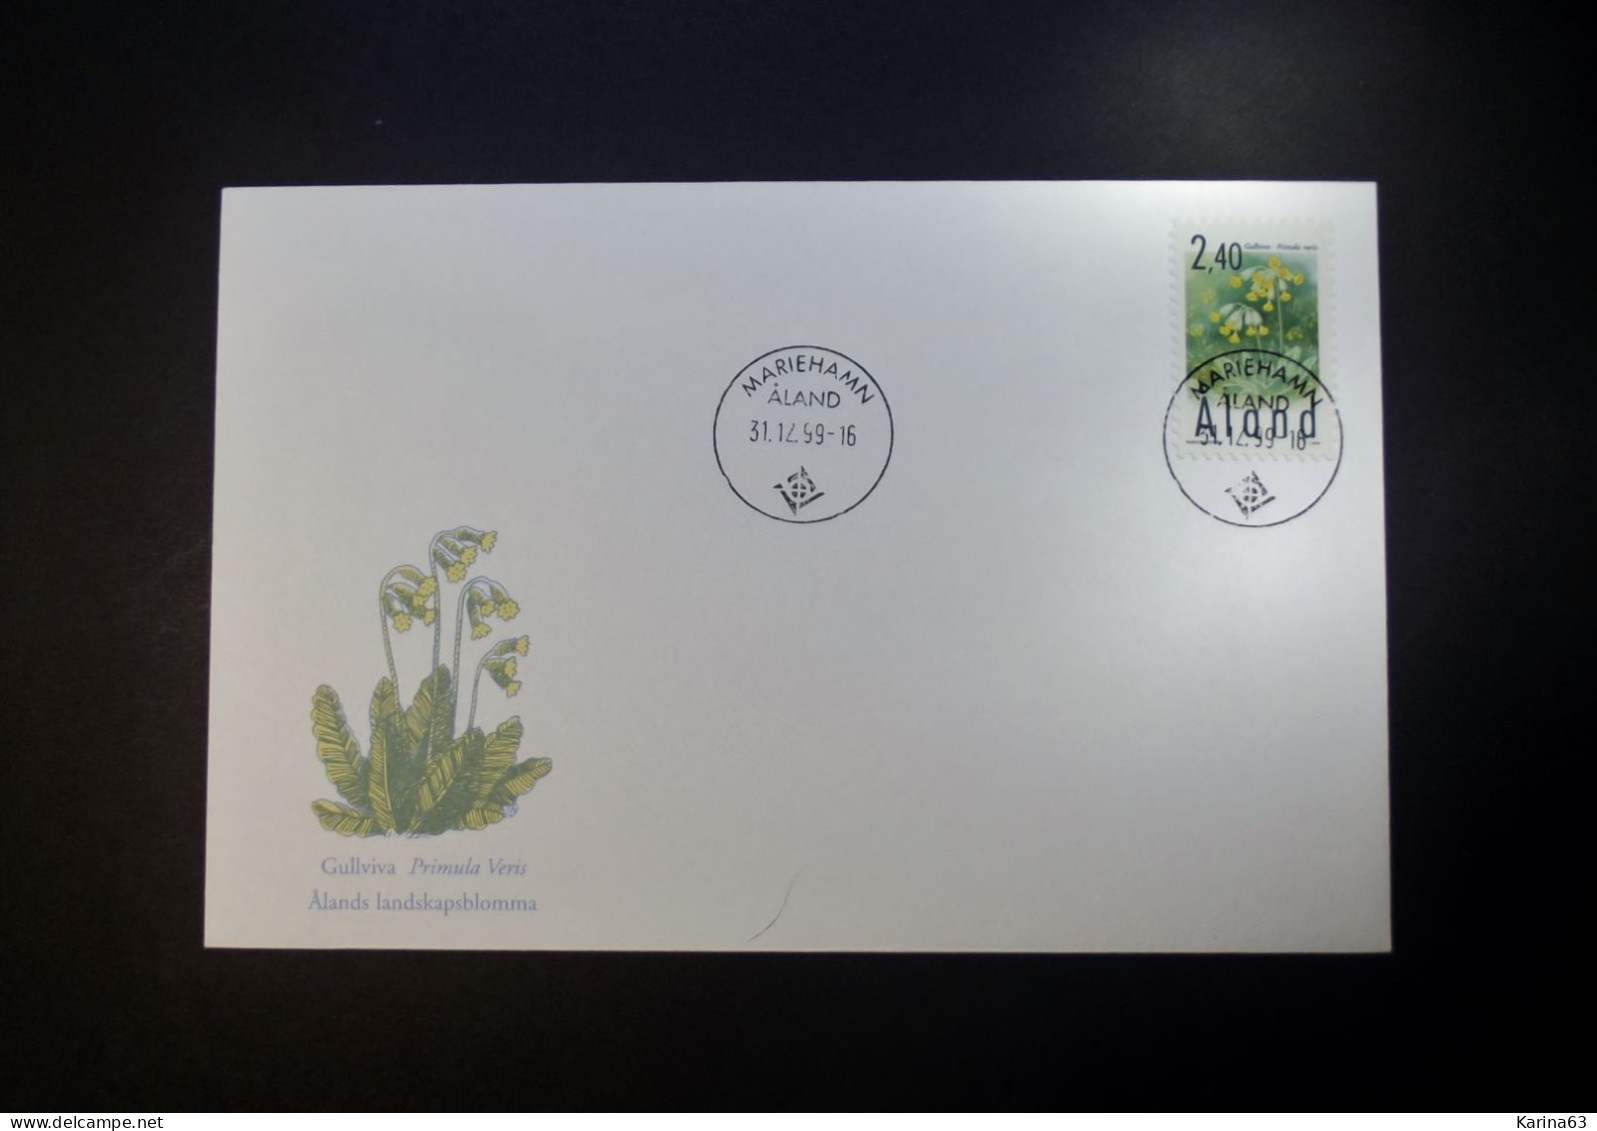 Aland - 1999 - Envelope - Cowslip Flower - Primula Stamp Mi 156 - Mariehamn - Aland - Aland